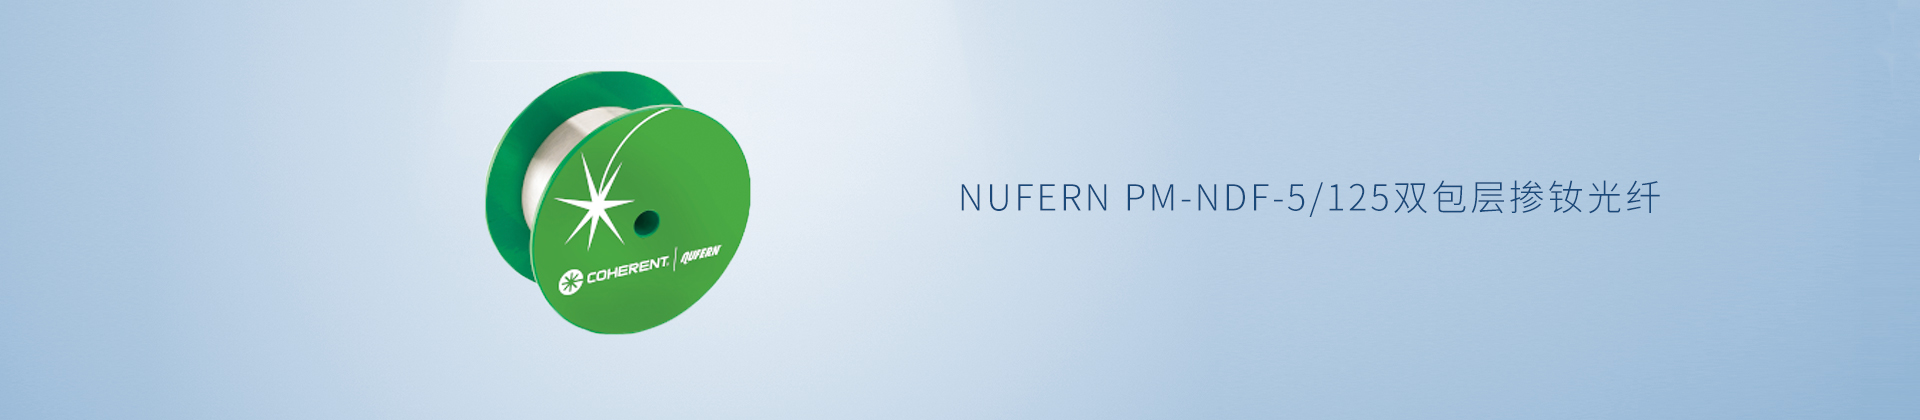 NUFERN PM-NDF-5/125双包层掺钕光纤